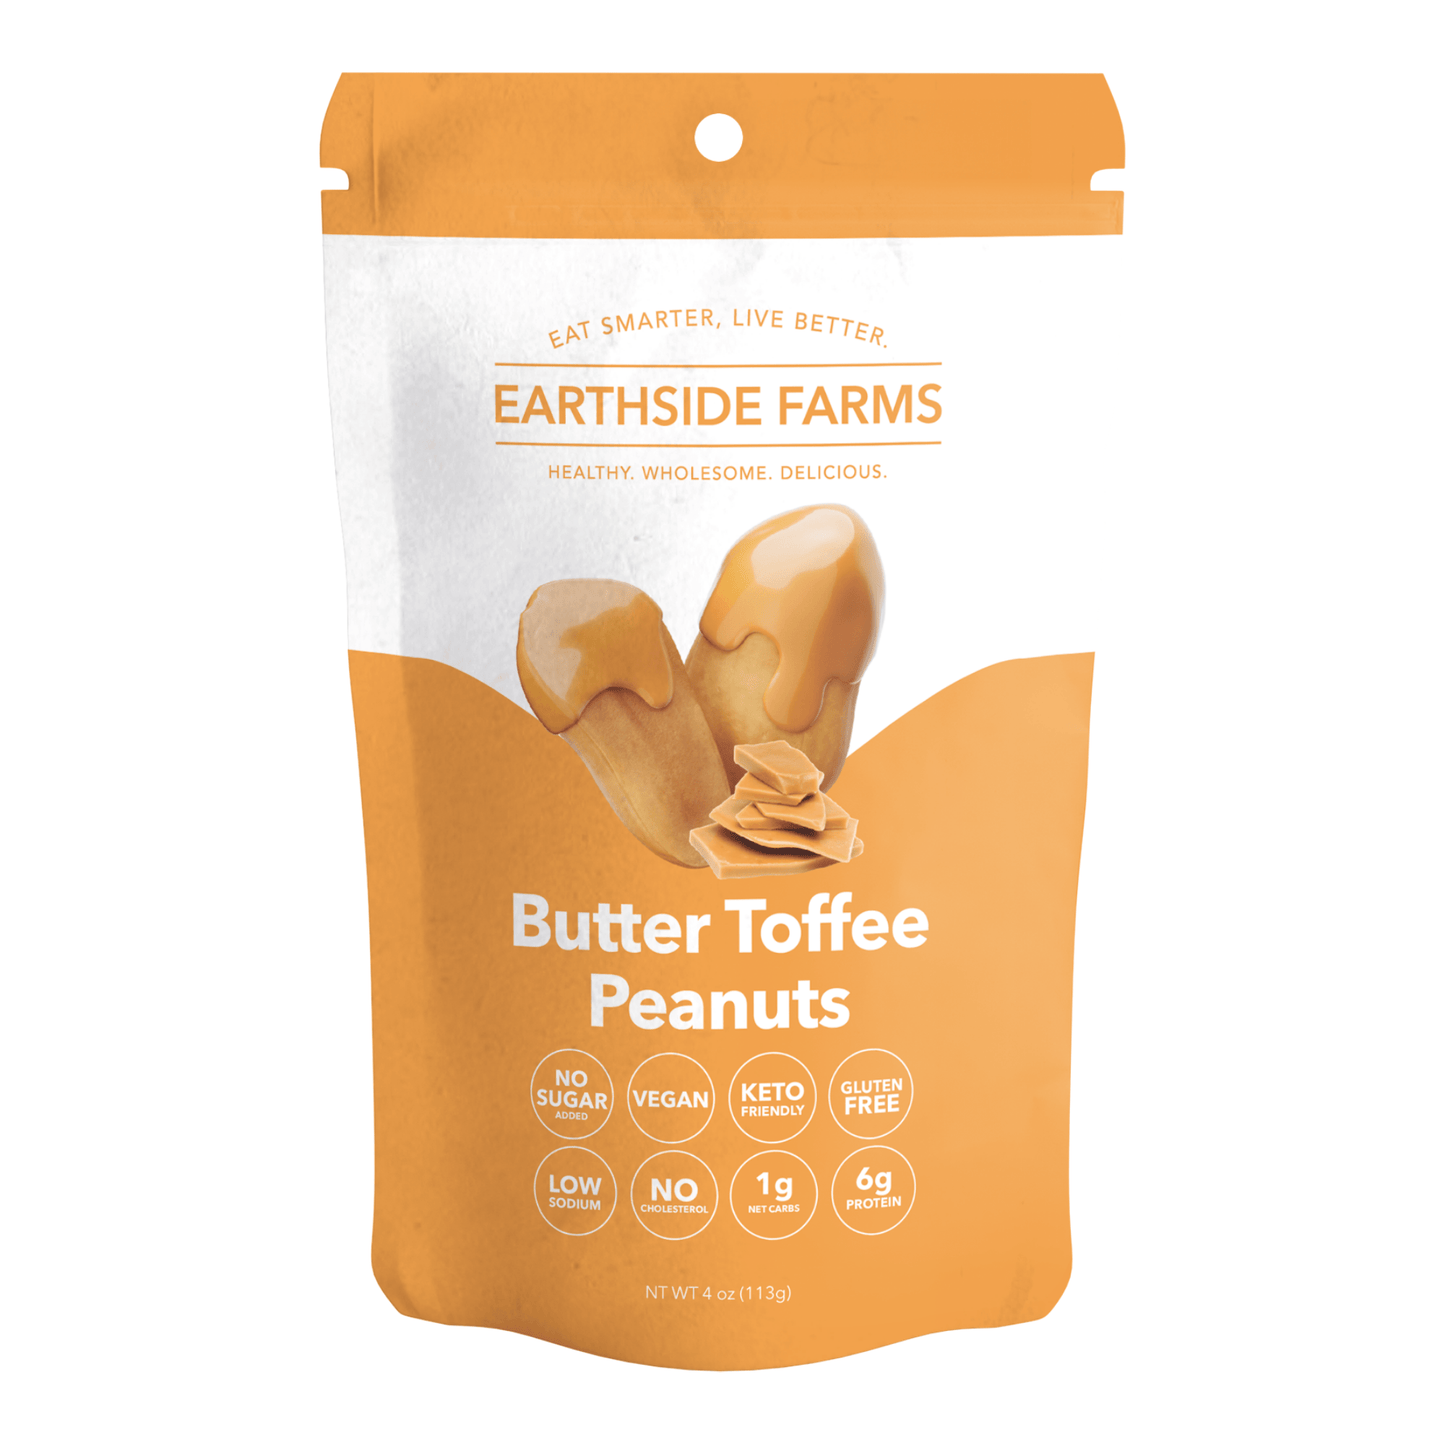 Butter Toffee Peanuts - Earthside Farms